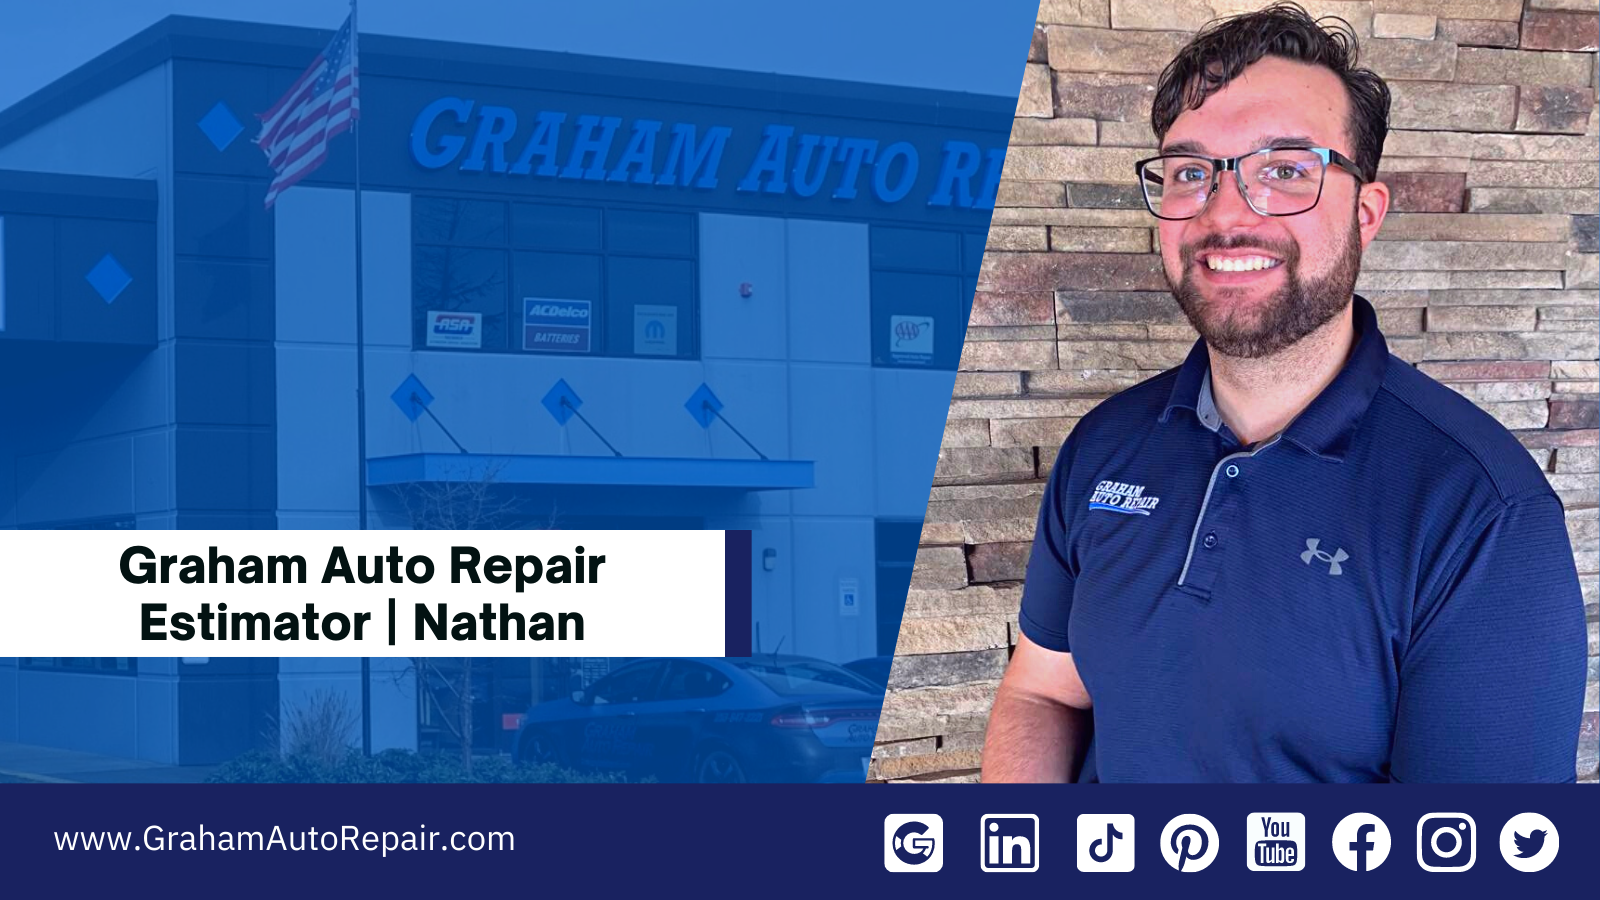 Graham Auto Repair Service Team - Service Estimator Nathan in Graham, WA 98338